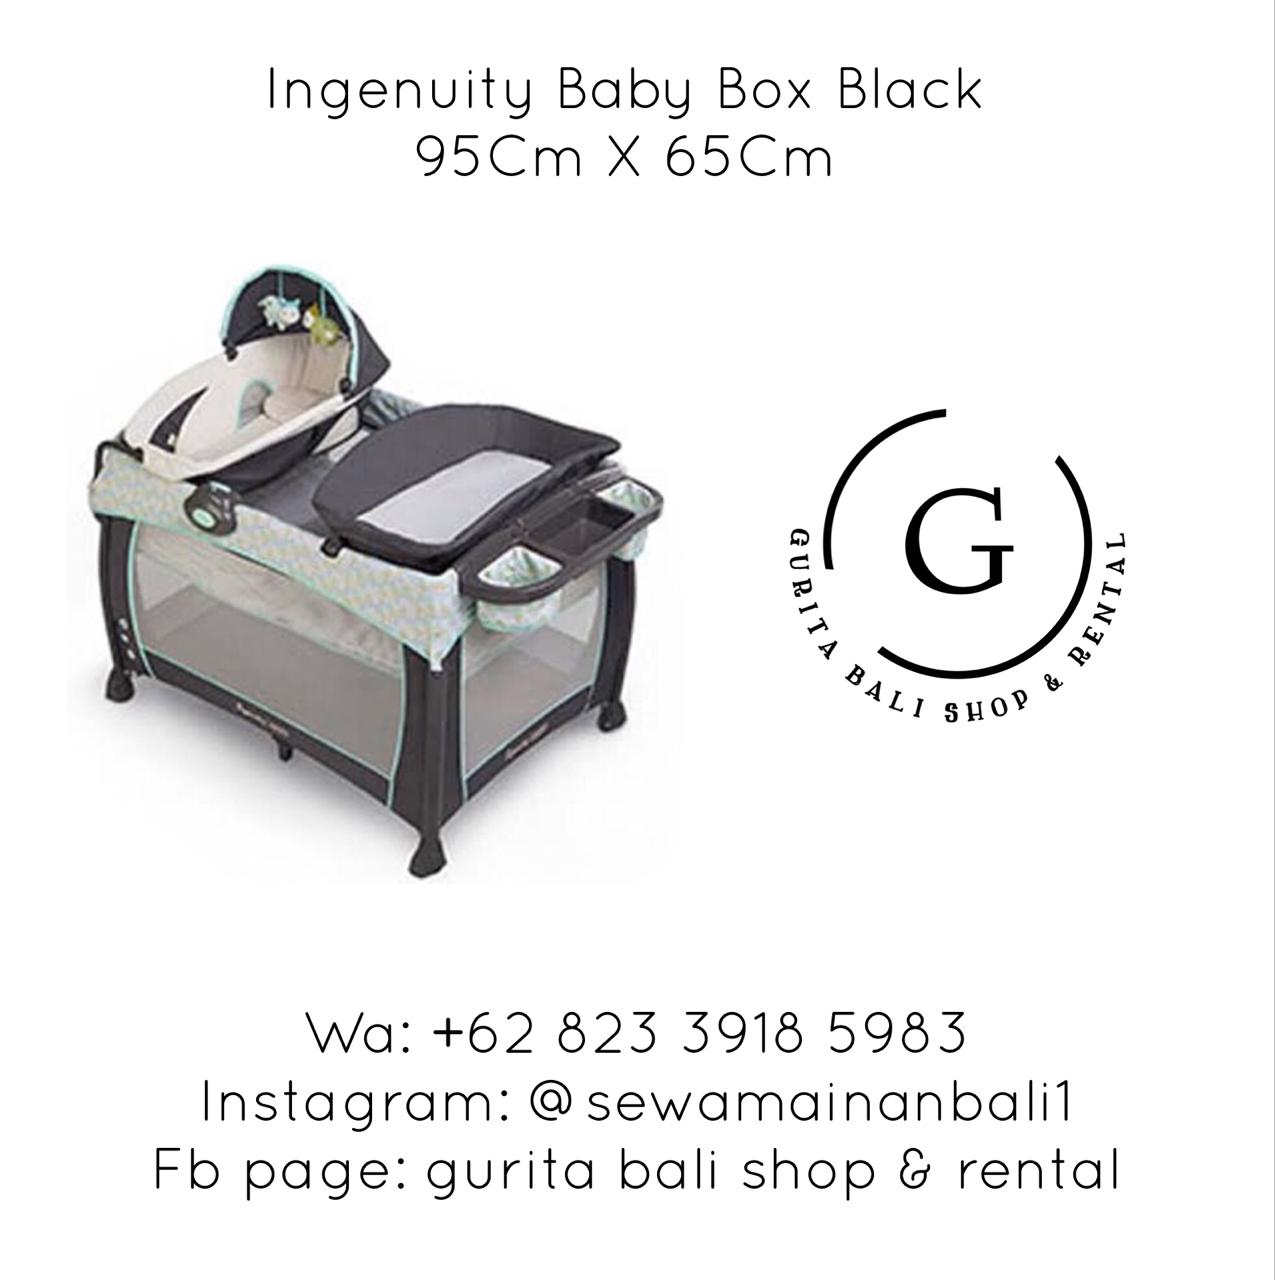 INGENUITY BABY BOX BLACK 2